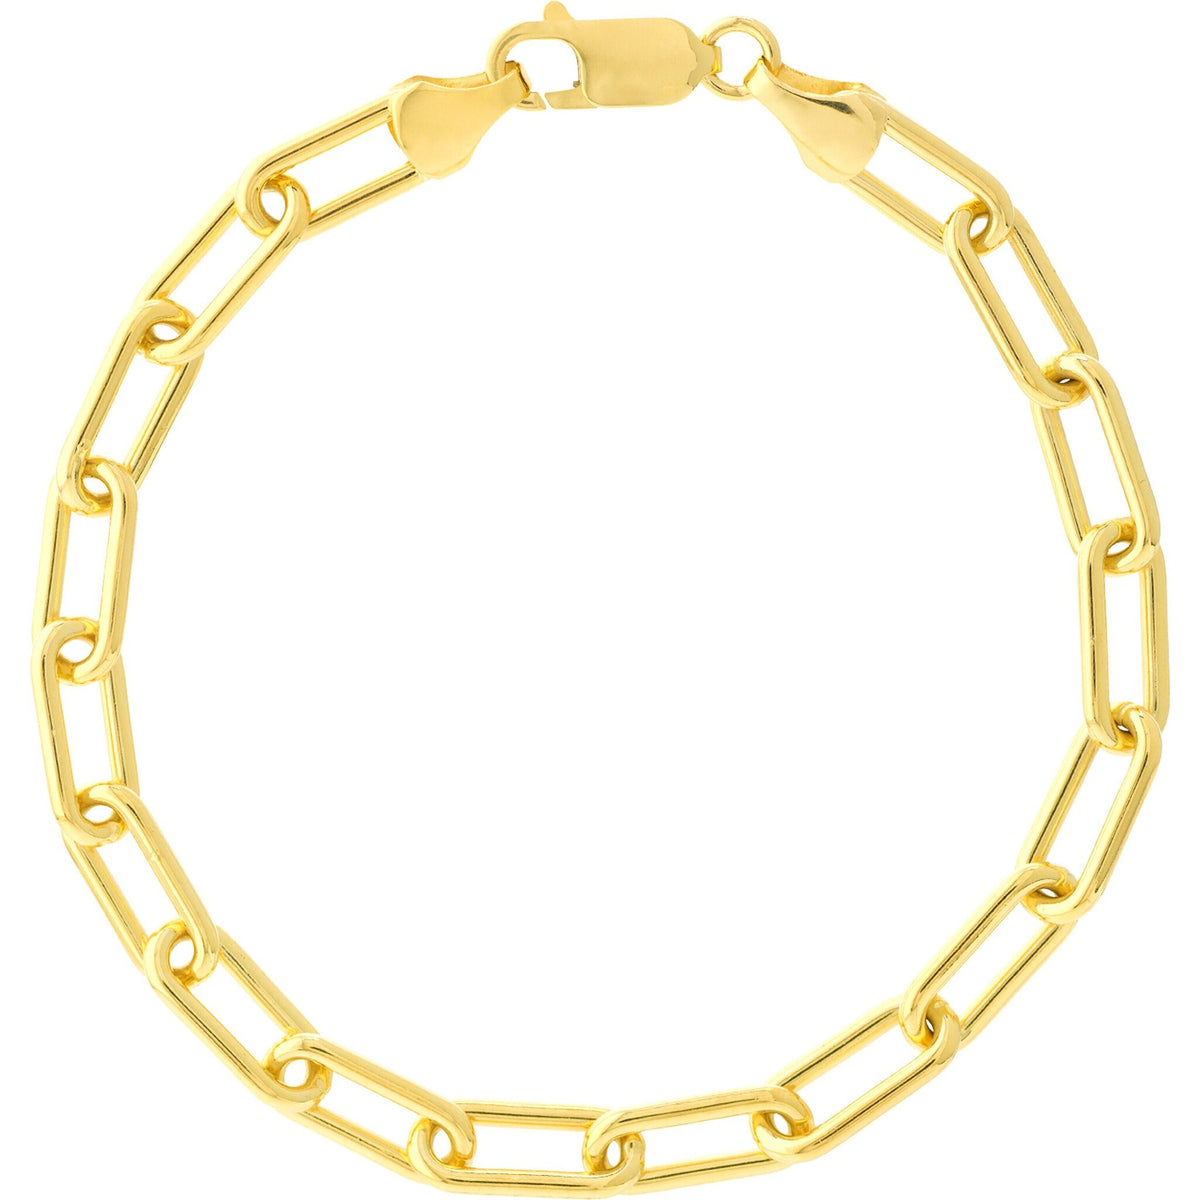 Olas d'Oro 7.75" Bracelet - 14K Yellow Gold 6mm Paper Clip Chain Bracelet with Lobster Lock